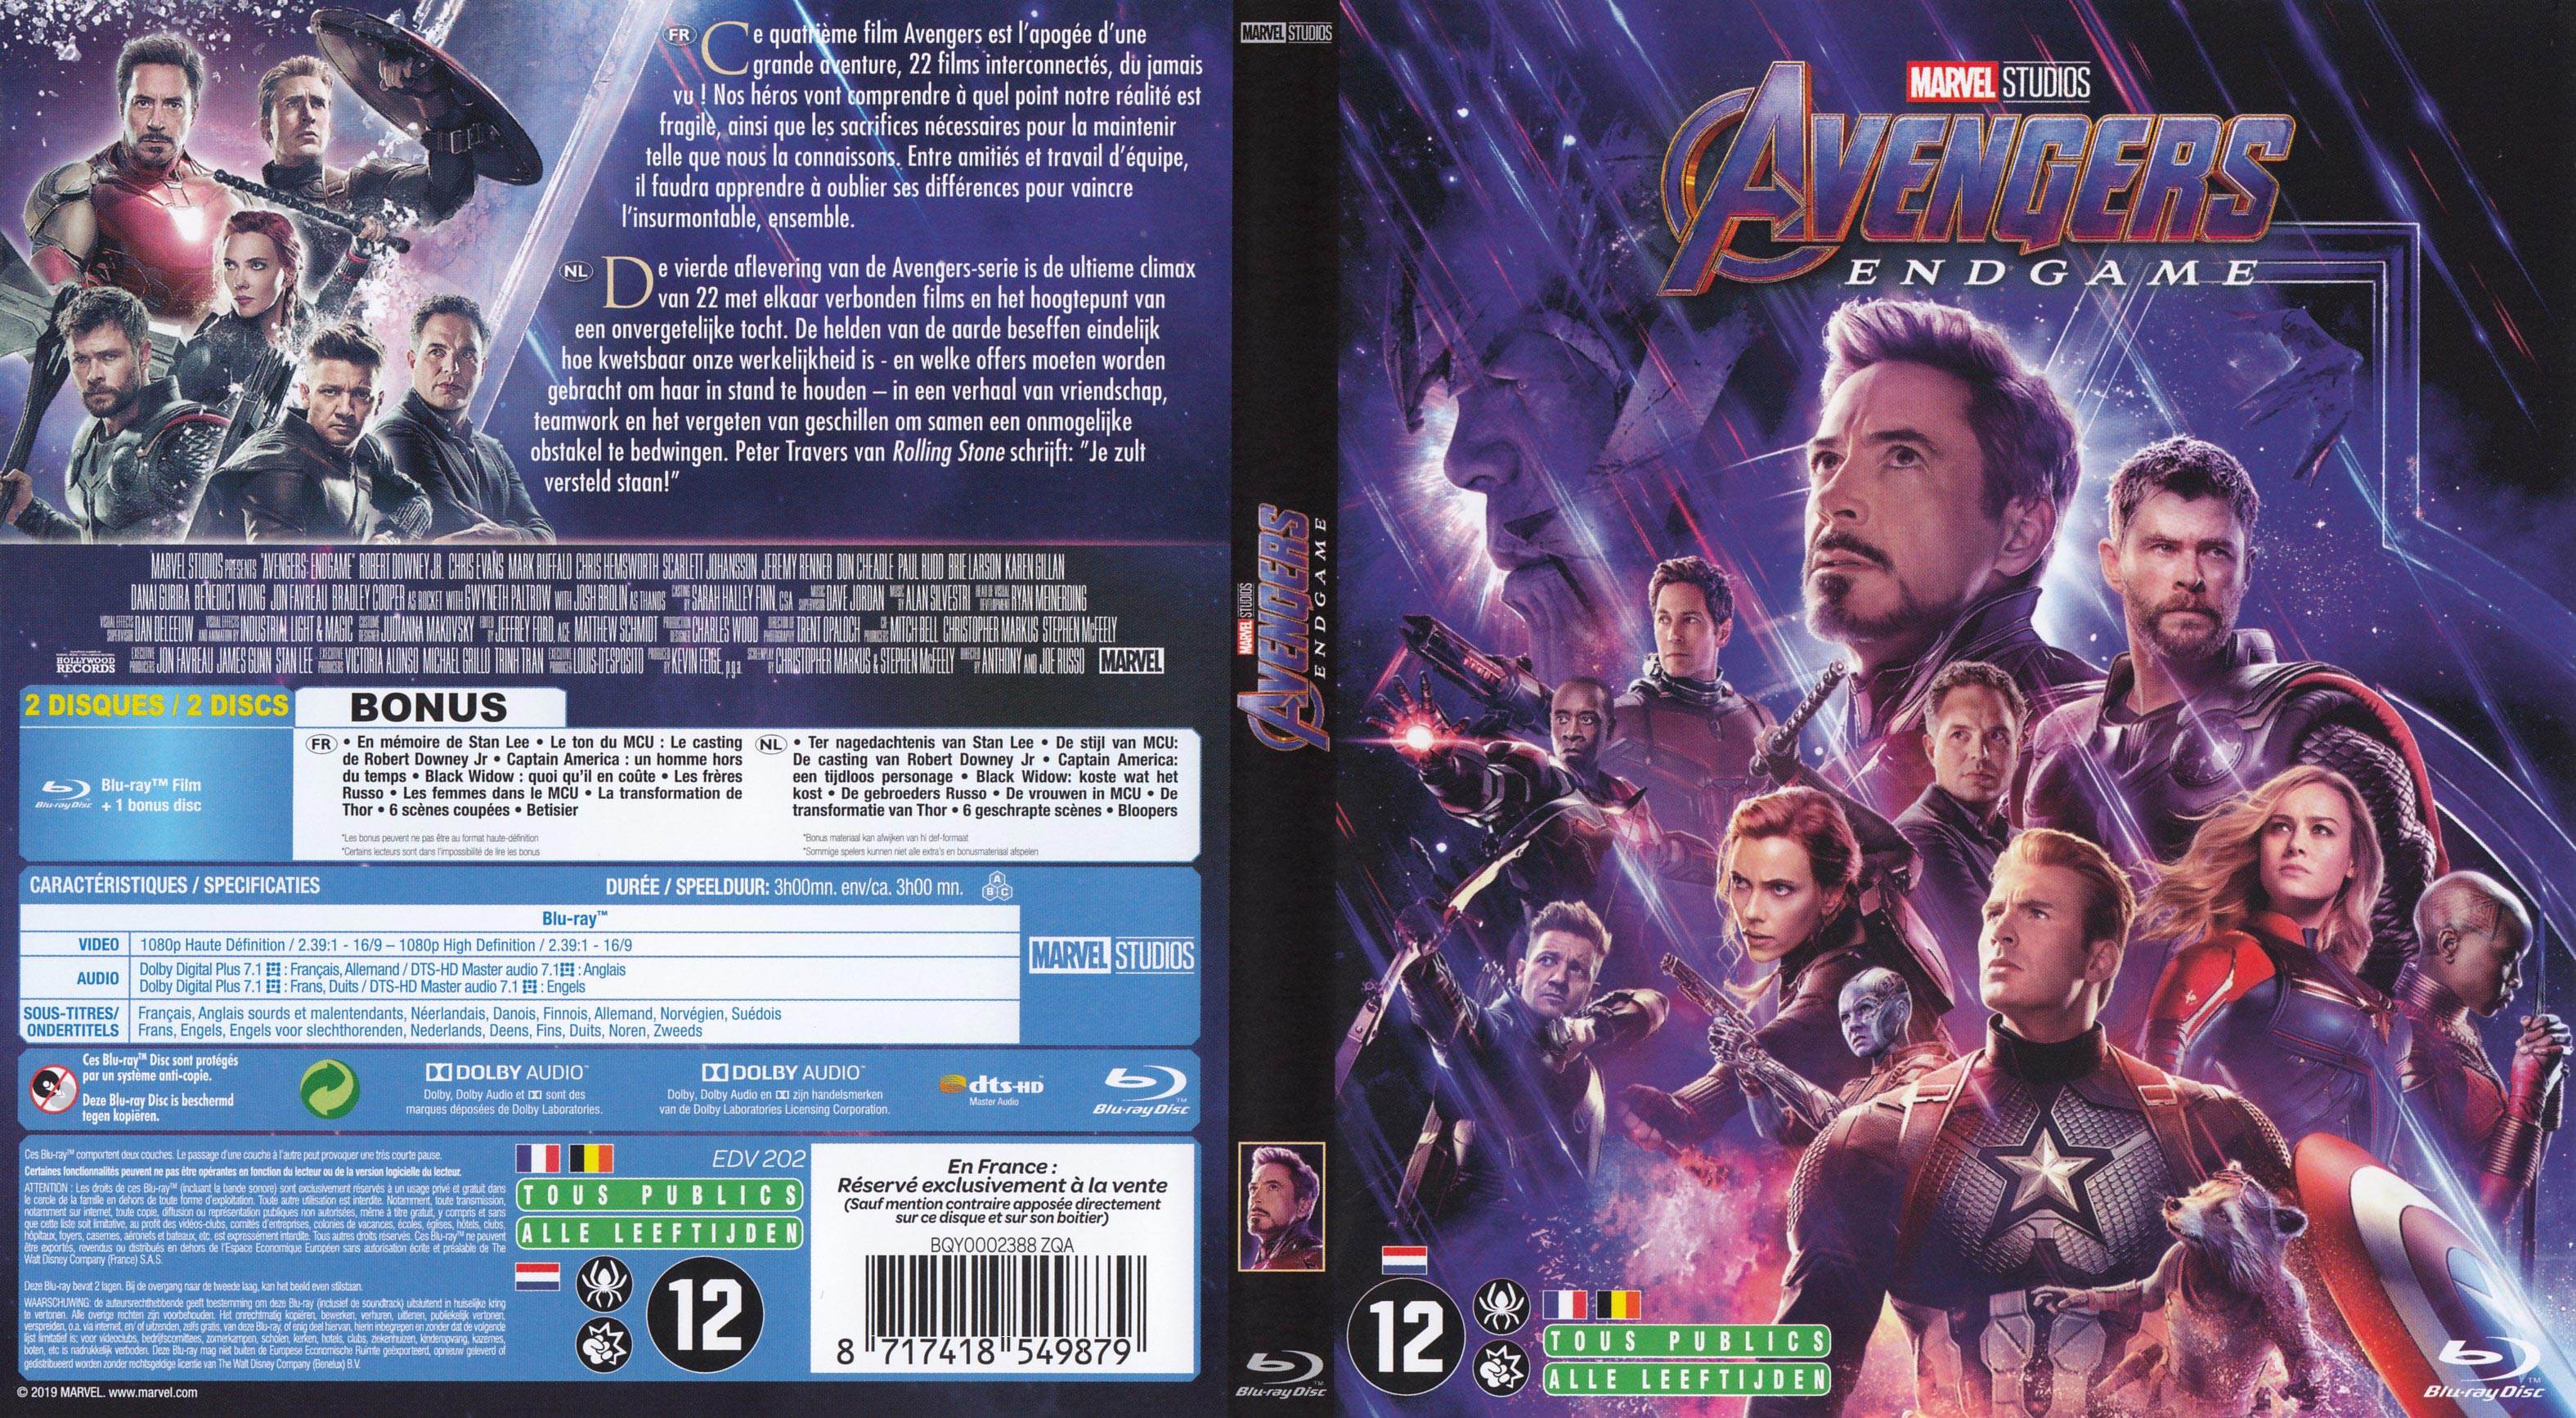 Jaquette DVD Avengers: Endgame (BLU-RAY)